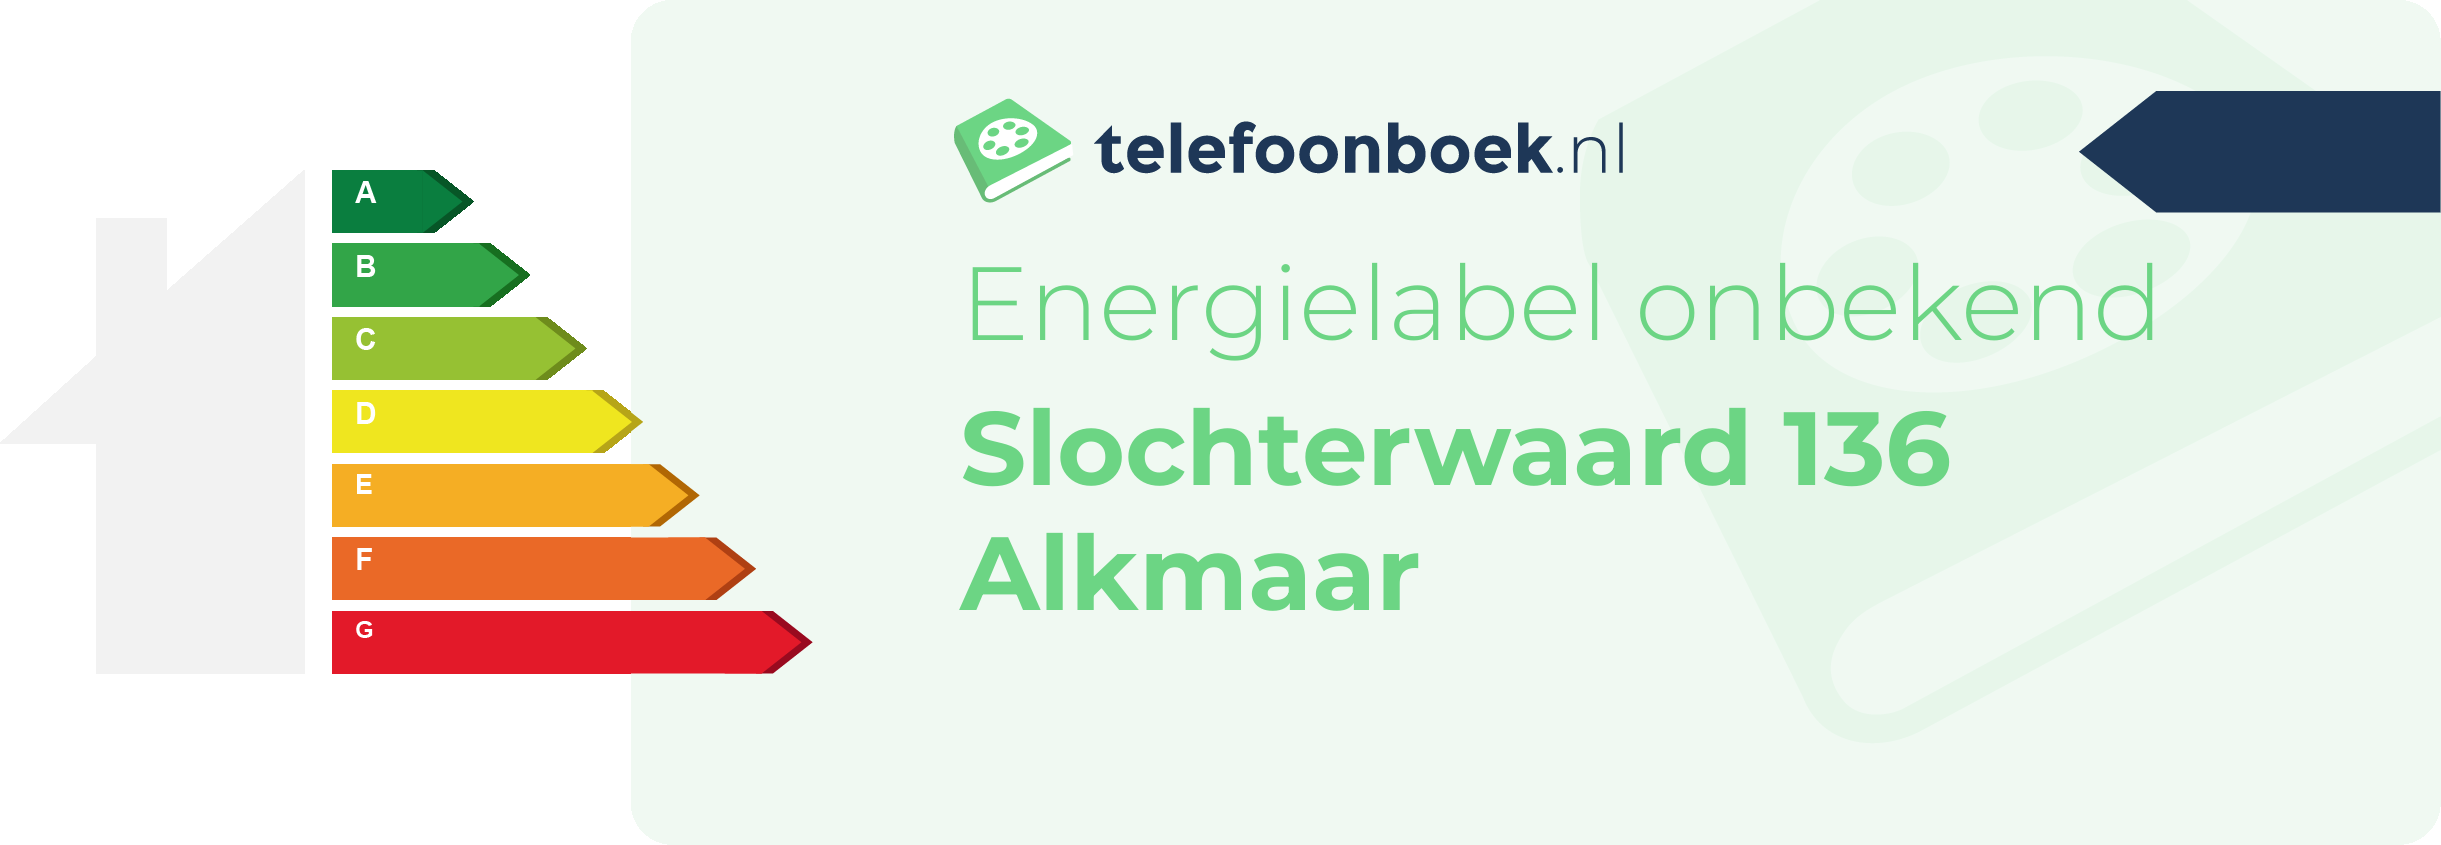 Energielabel Slochterwaard 136 Alkmaar